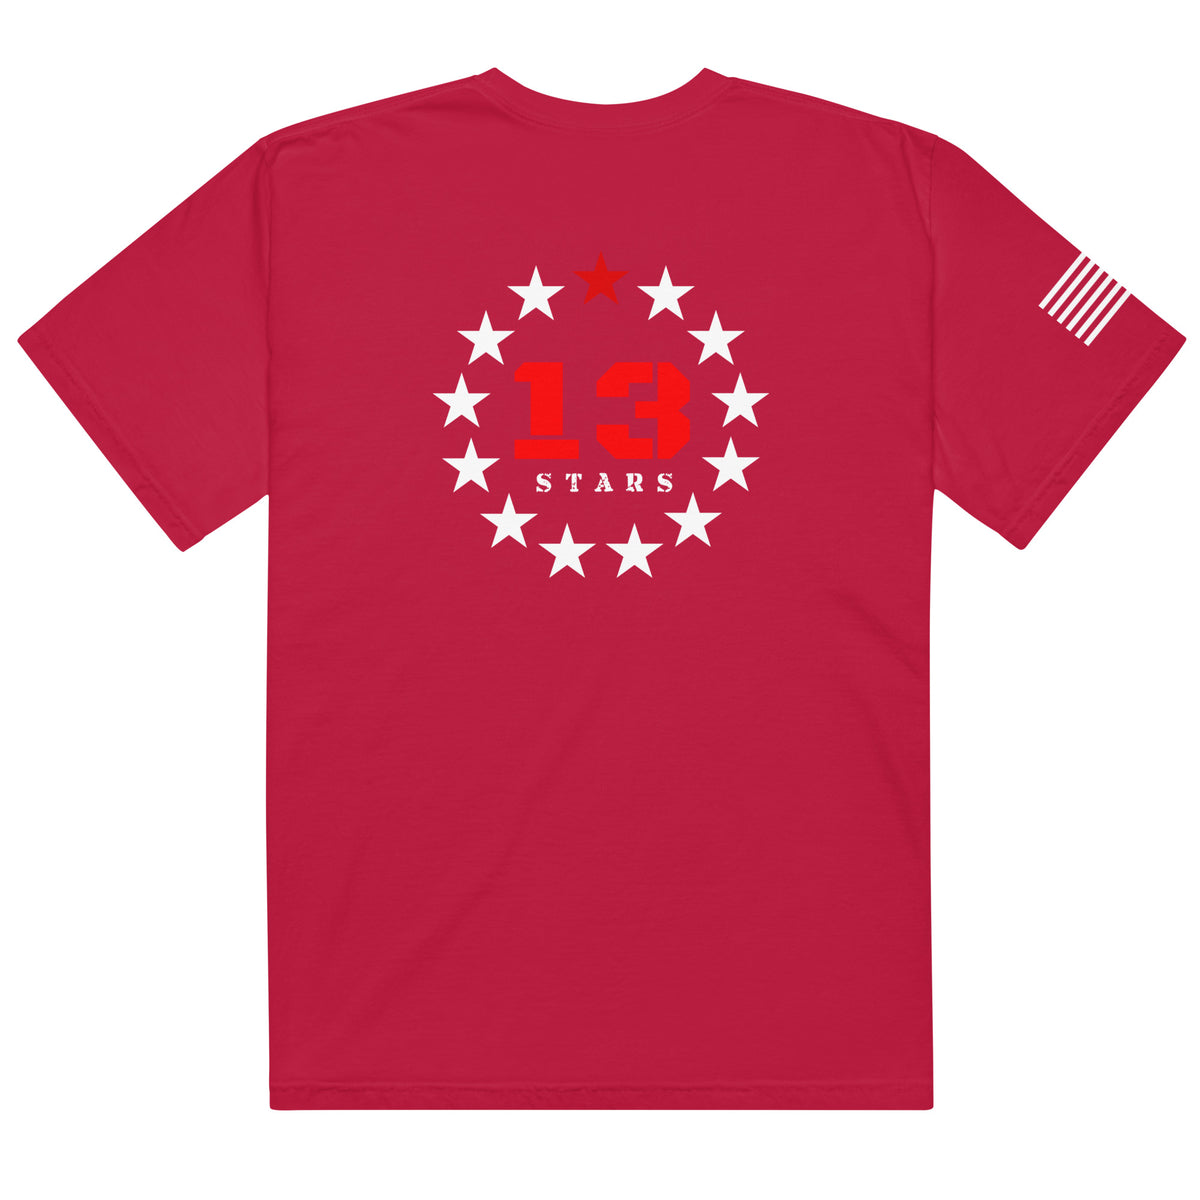 13 Stars - T-Shirt